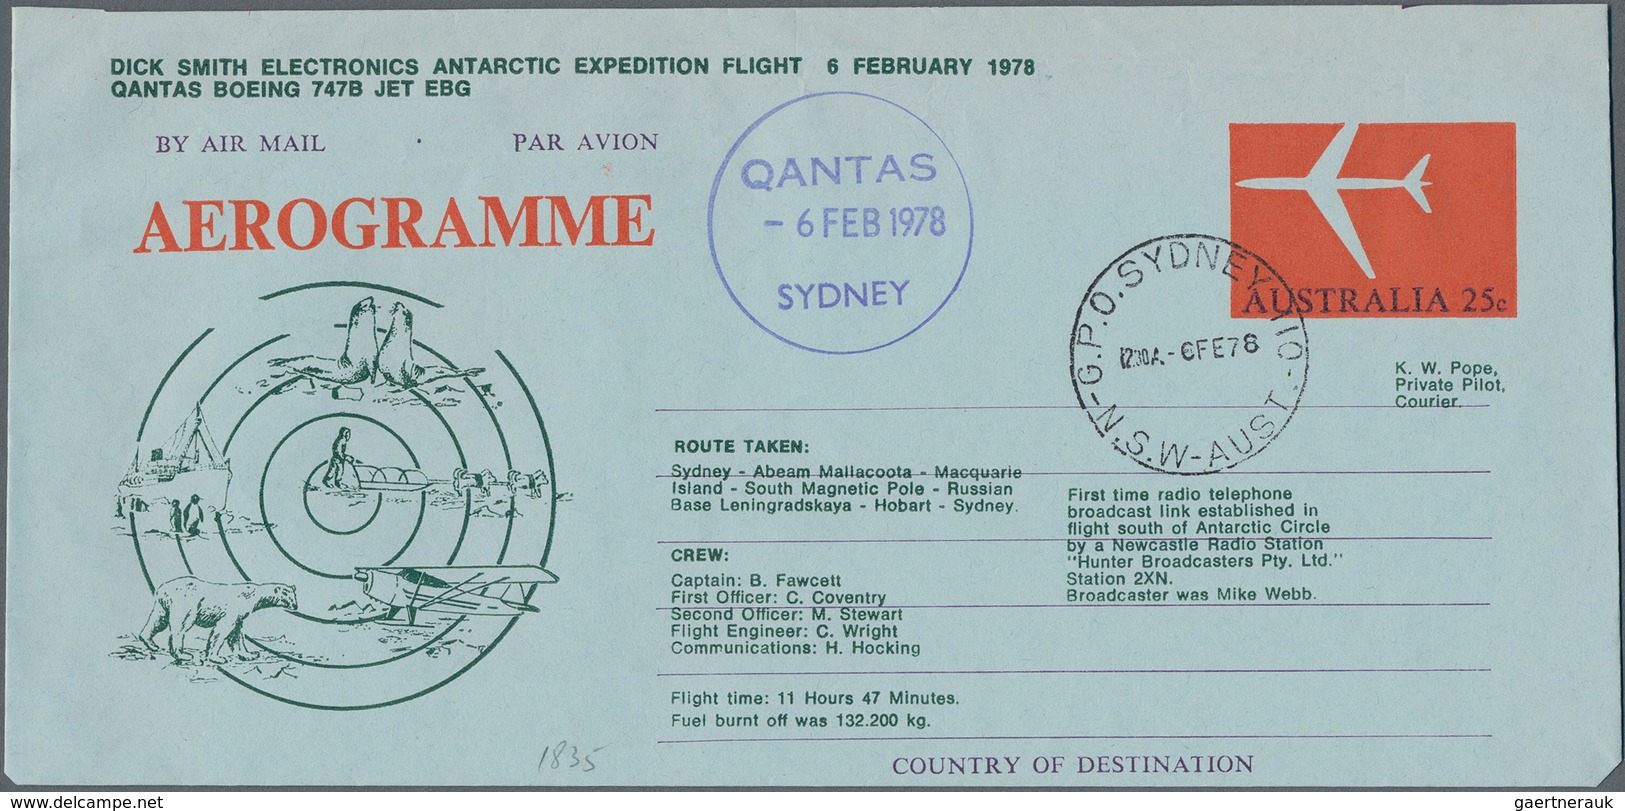 Australien - Ganzsachen: 1965/2010 (ca.) Accumulation Of 1.840 Unused/CTO/used Aerogrammes And Airle - Enteros Postales